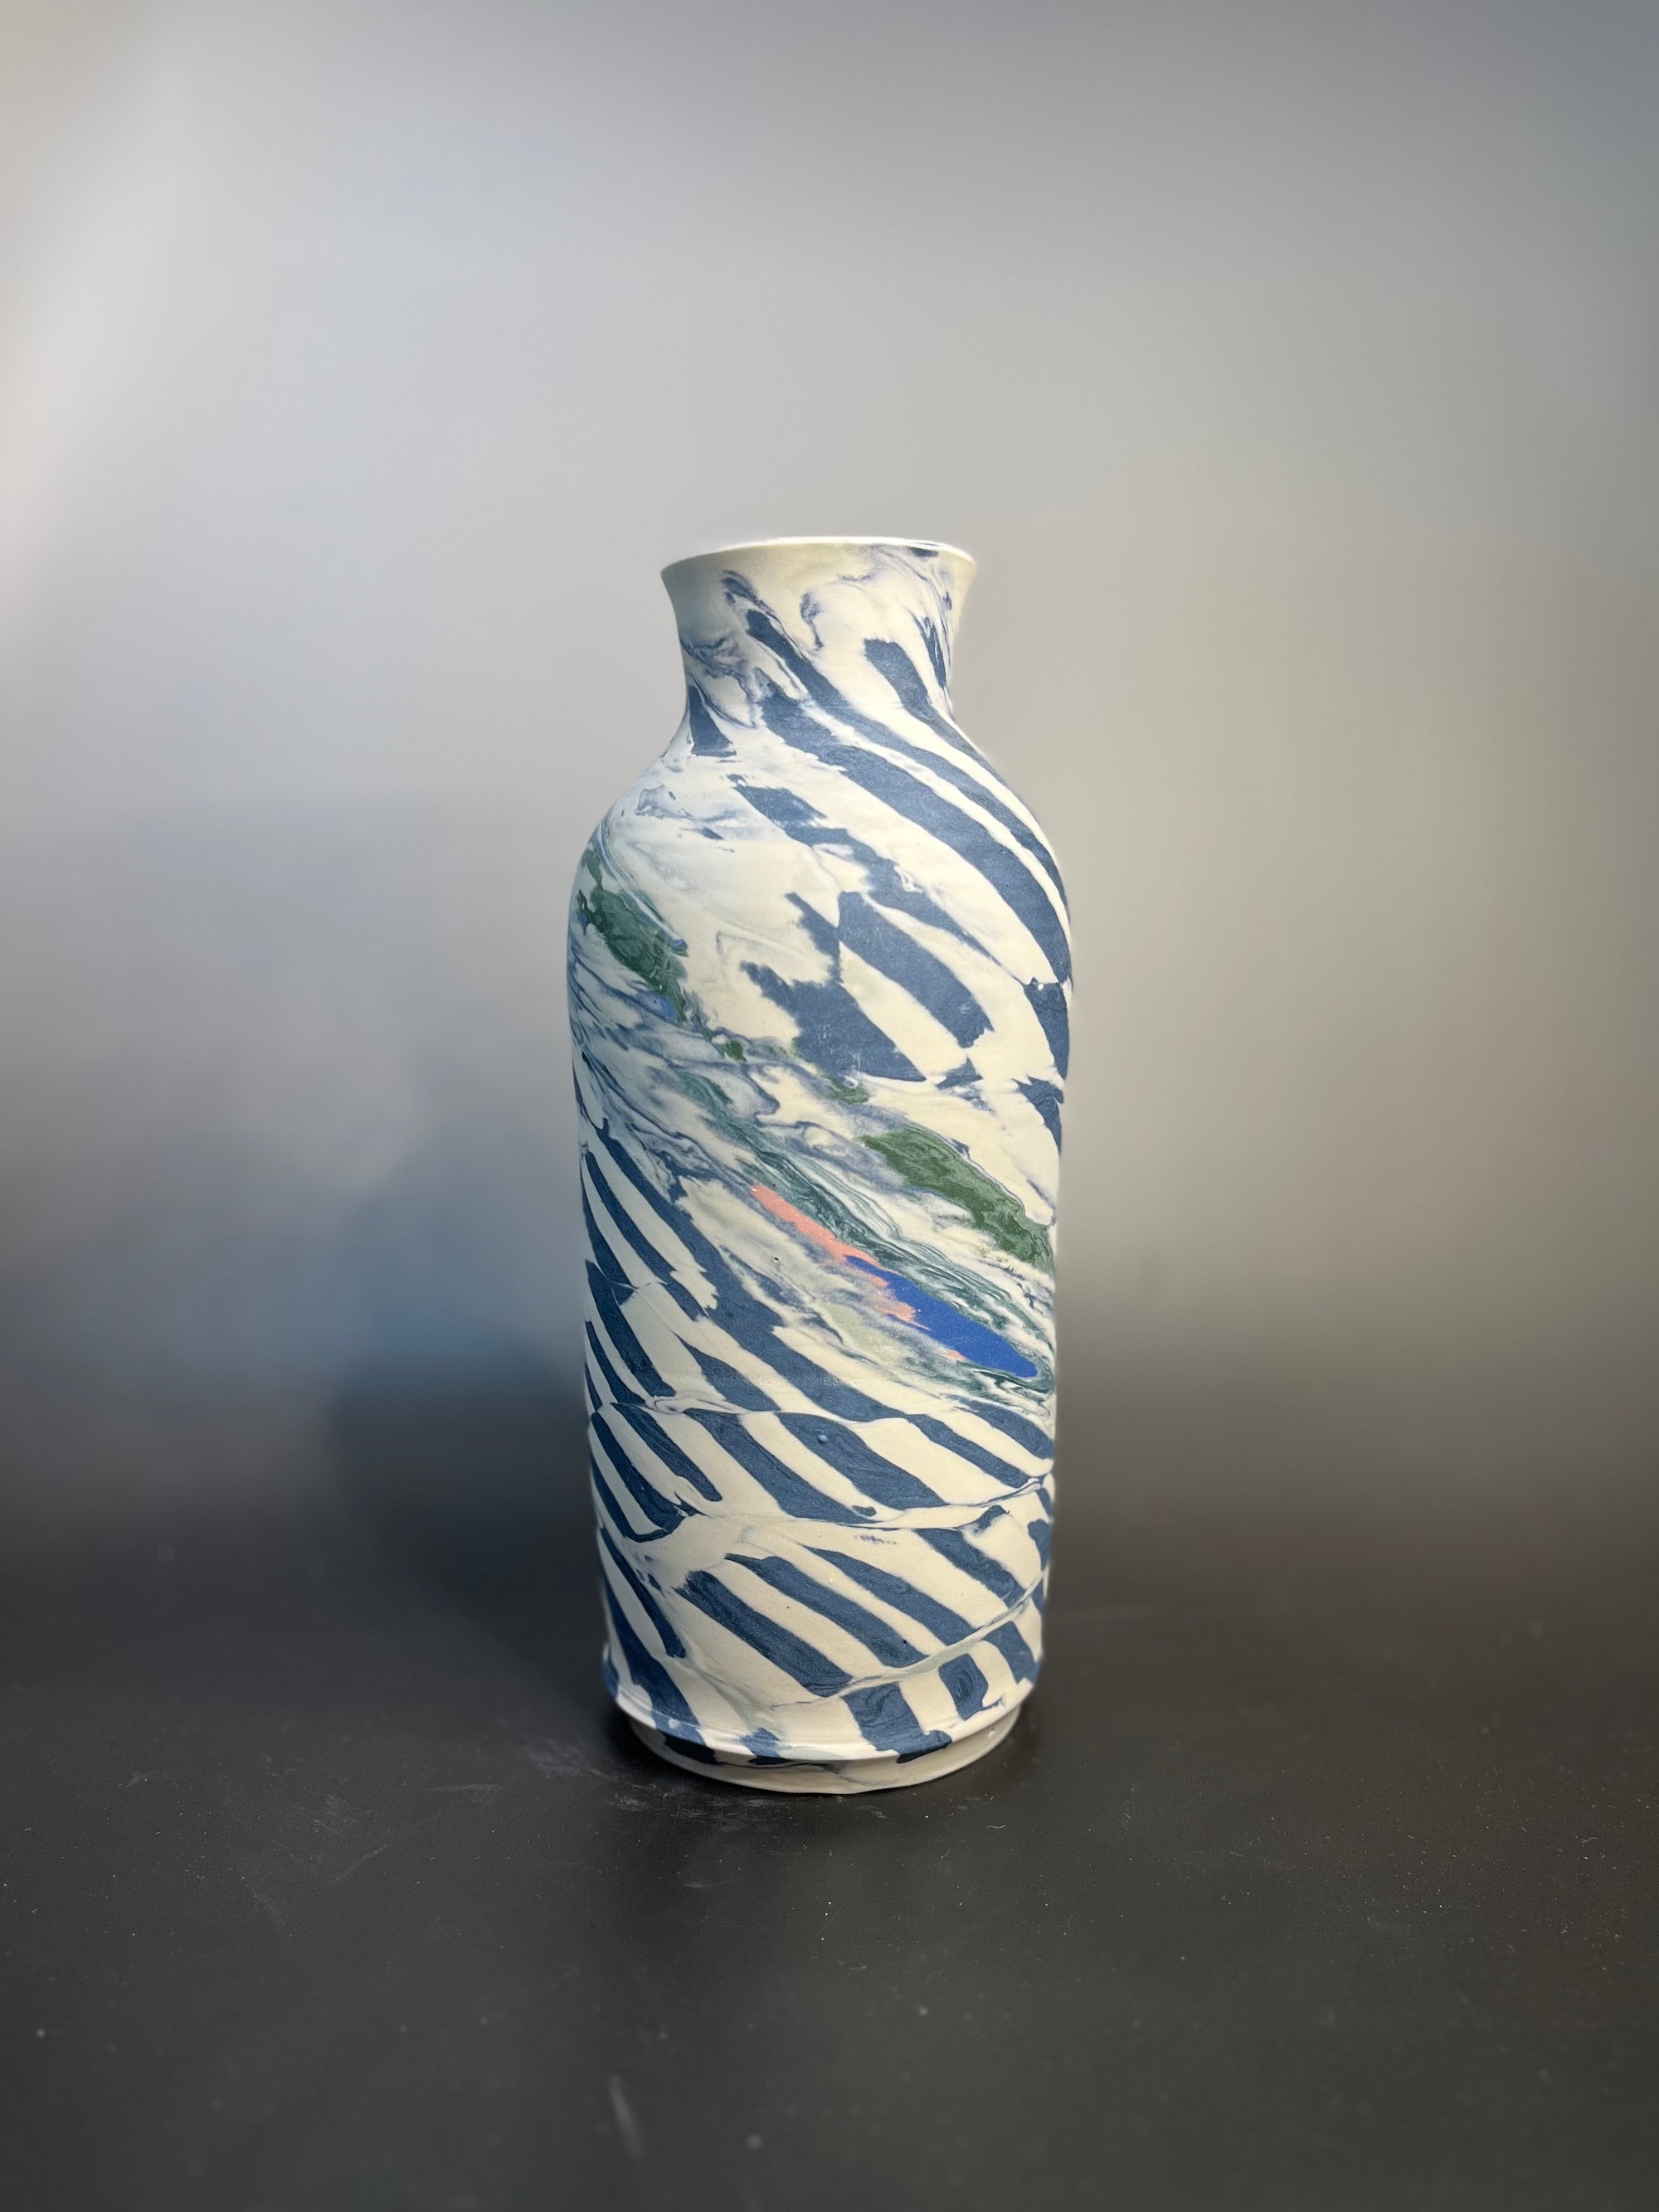 Large checkered bottle neck vase